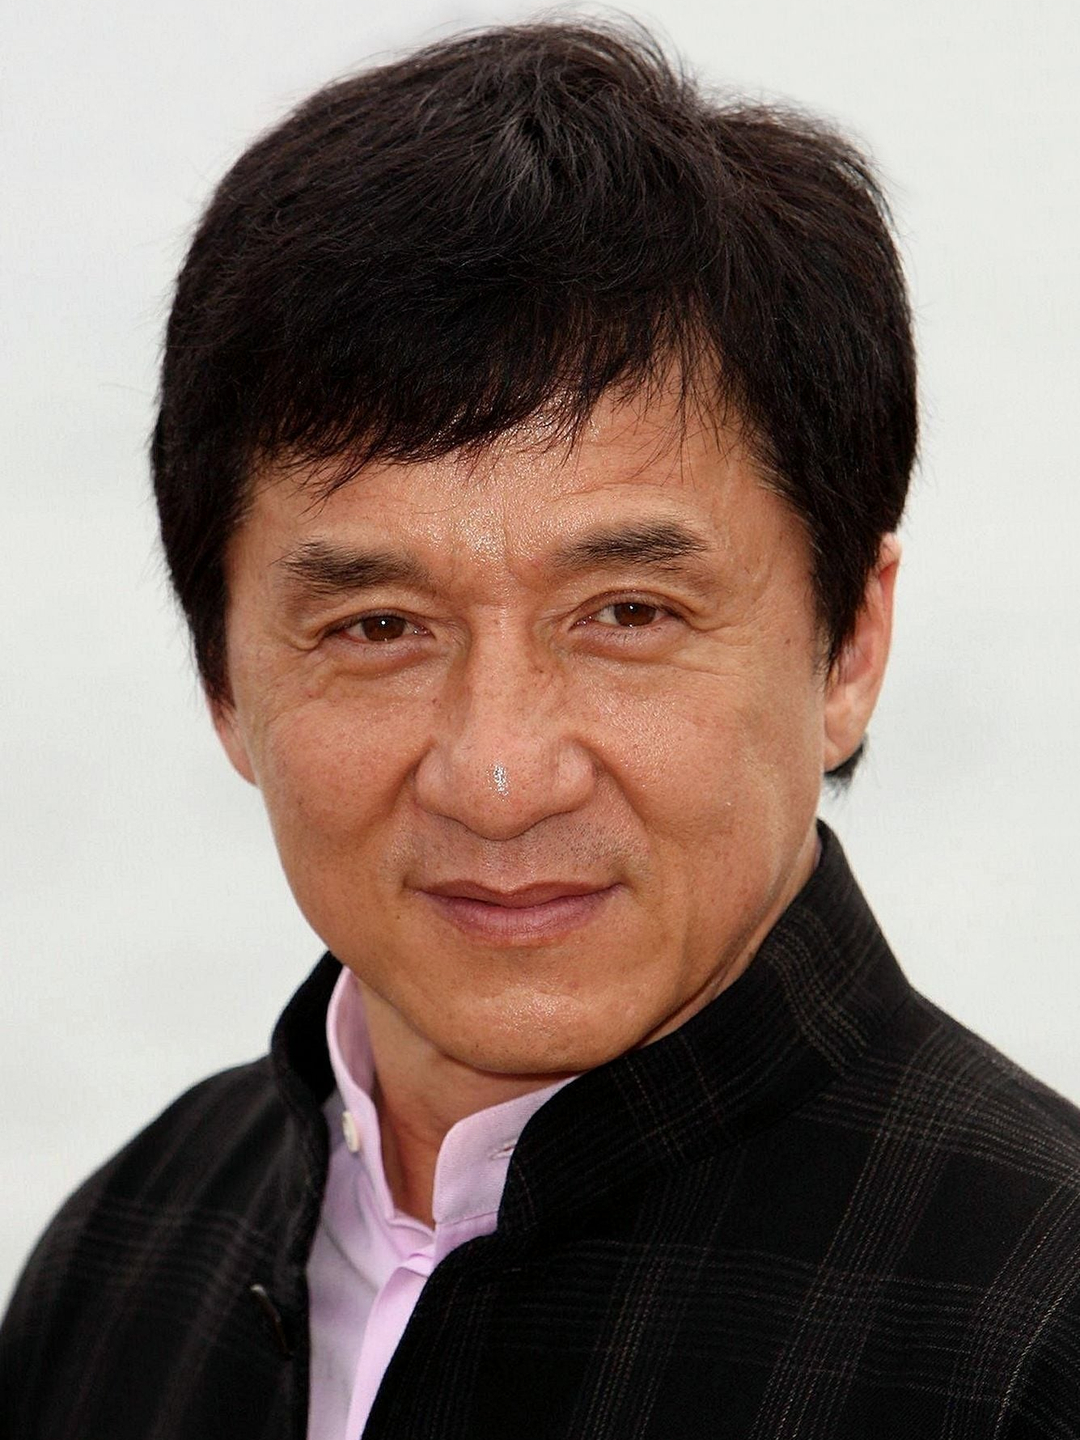 Jackie Chan where did he study